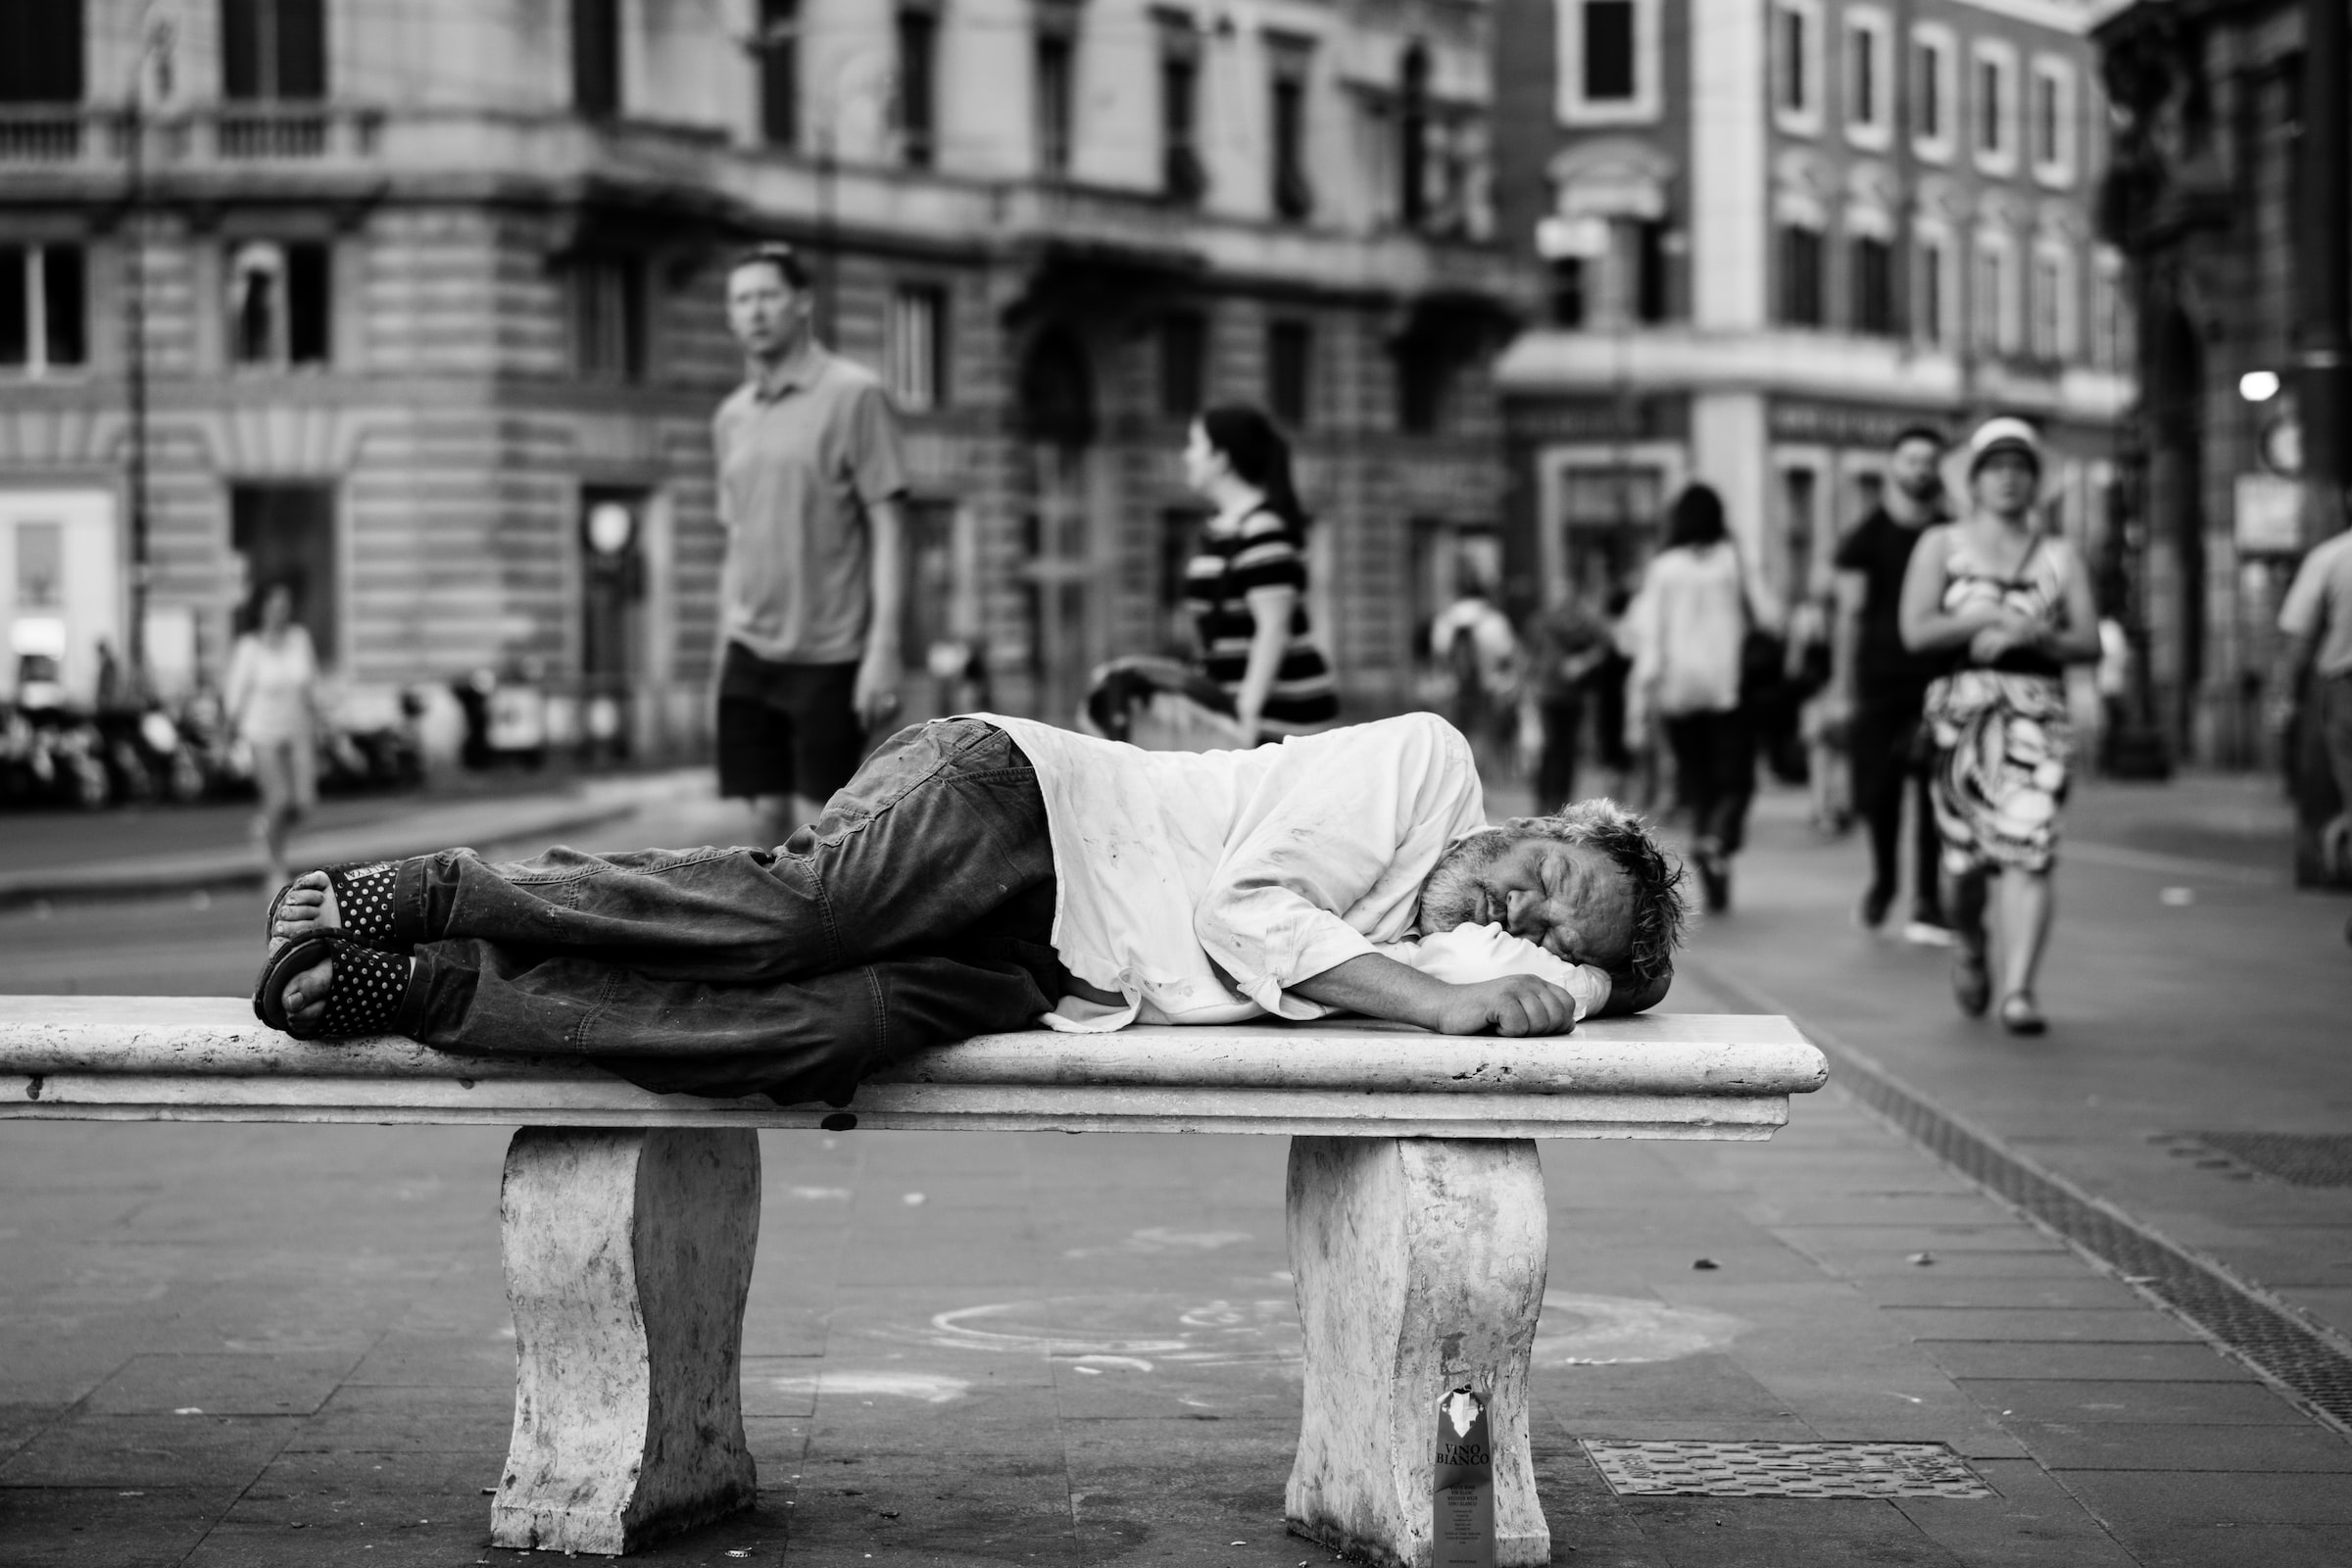 A homeless man sleeping on a stone bench